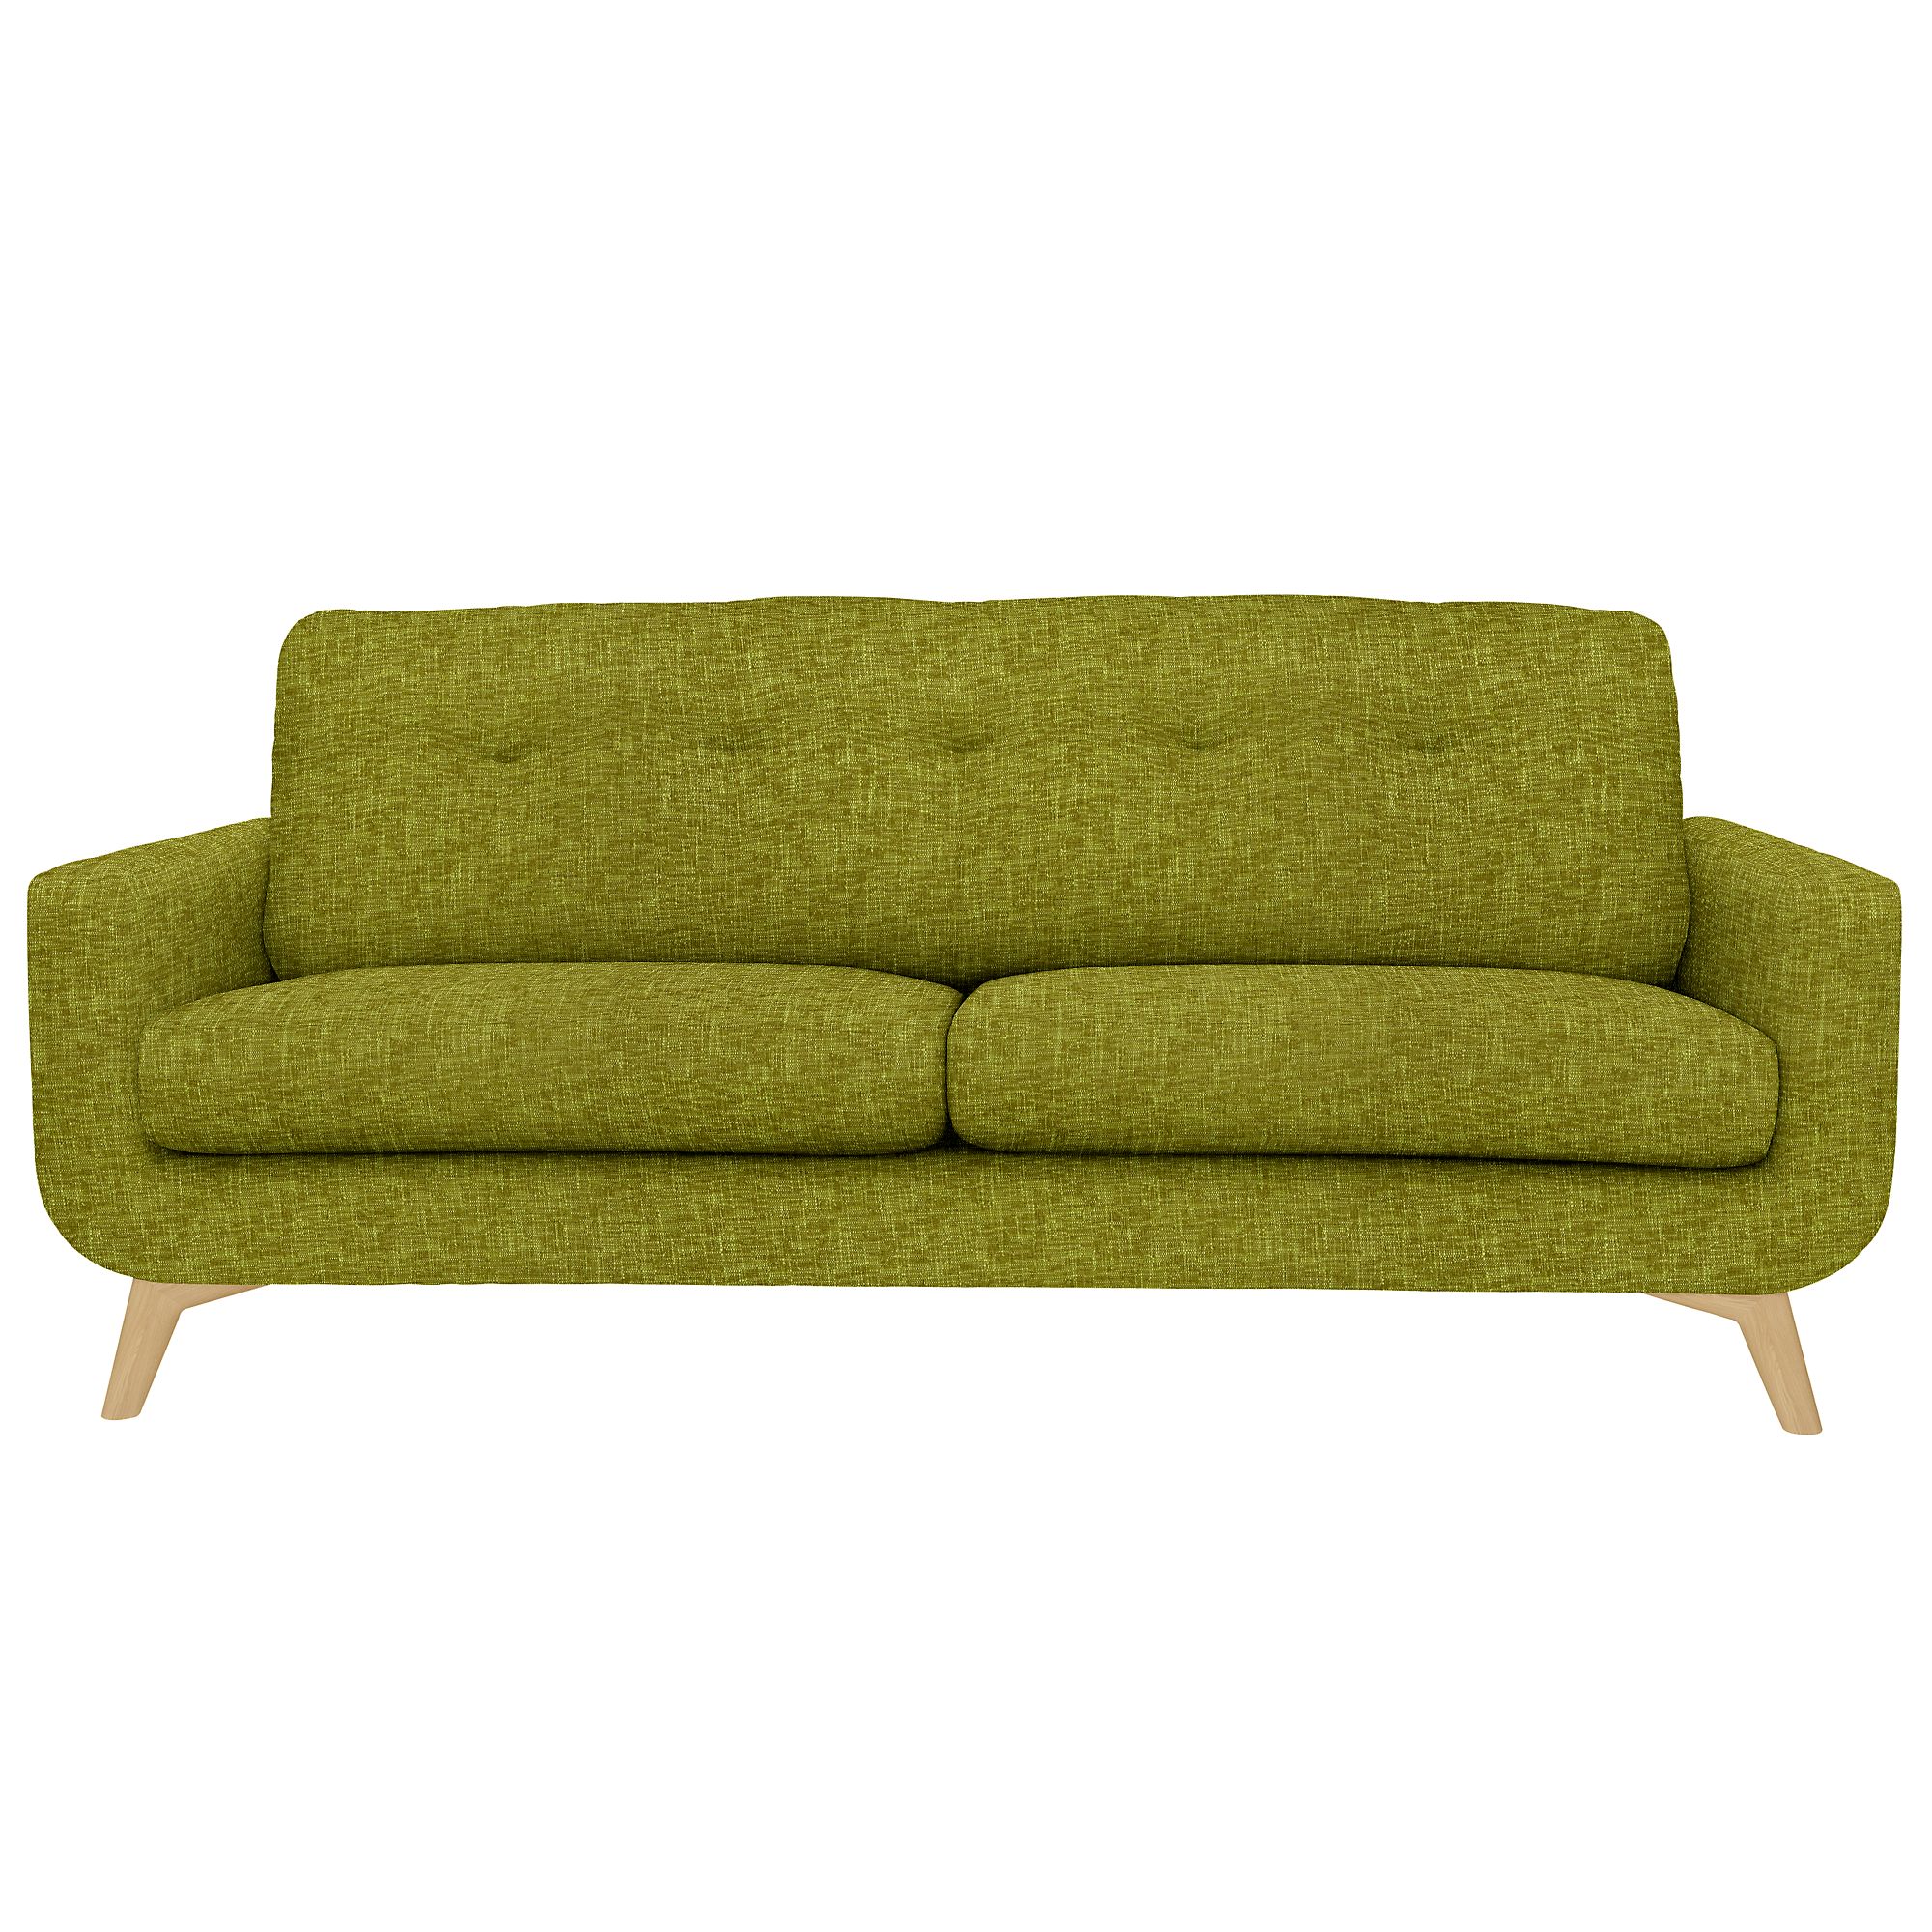 John Lewis Barbican Large Sofa, Cossette Green /